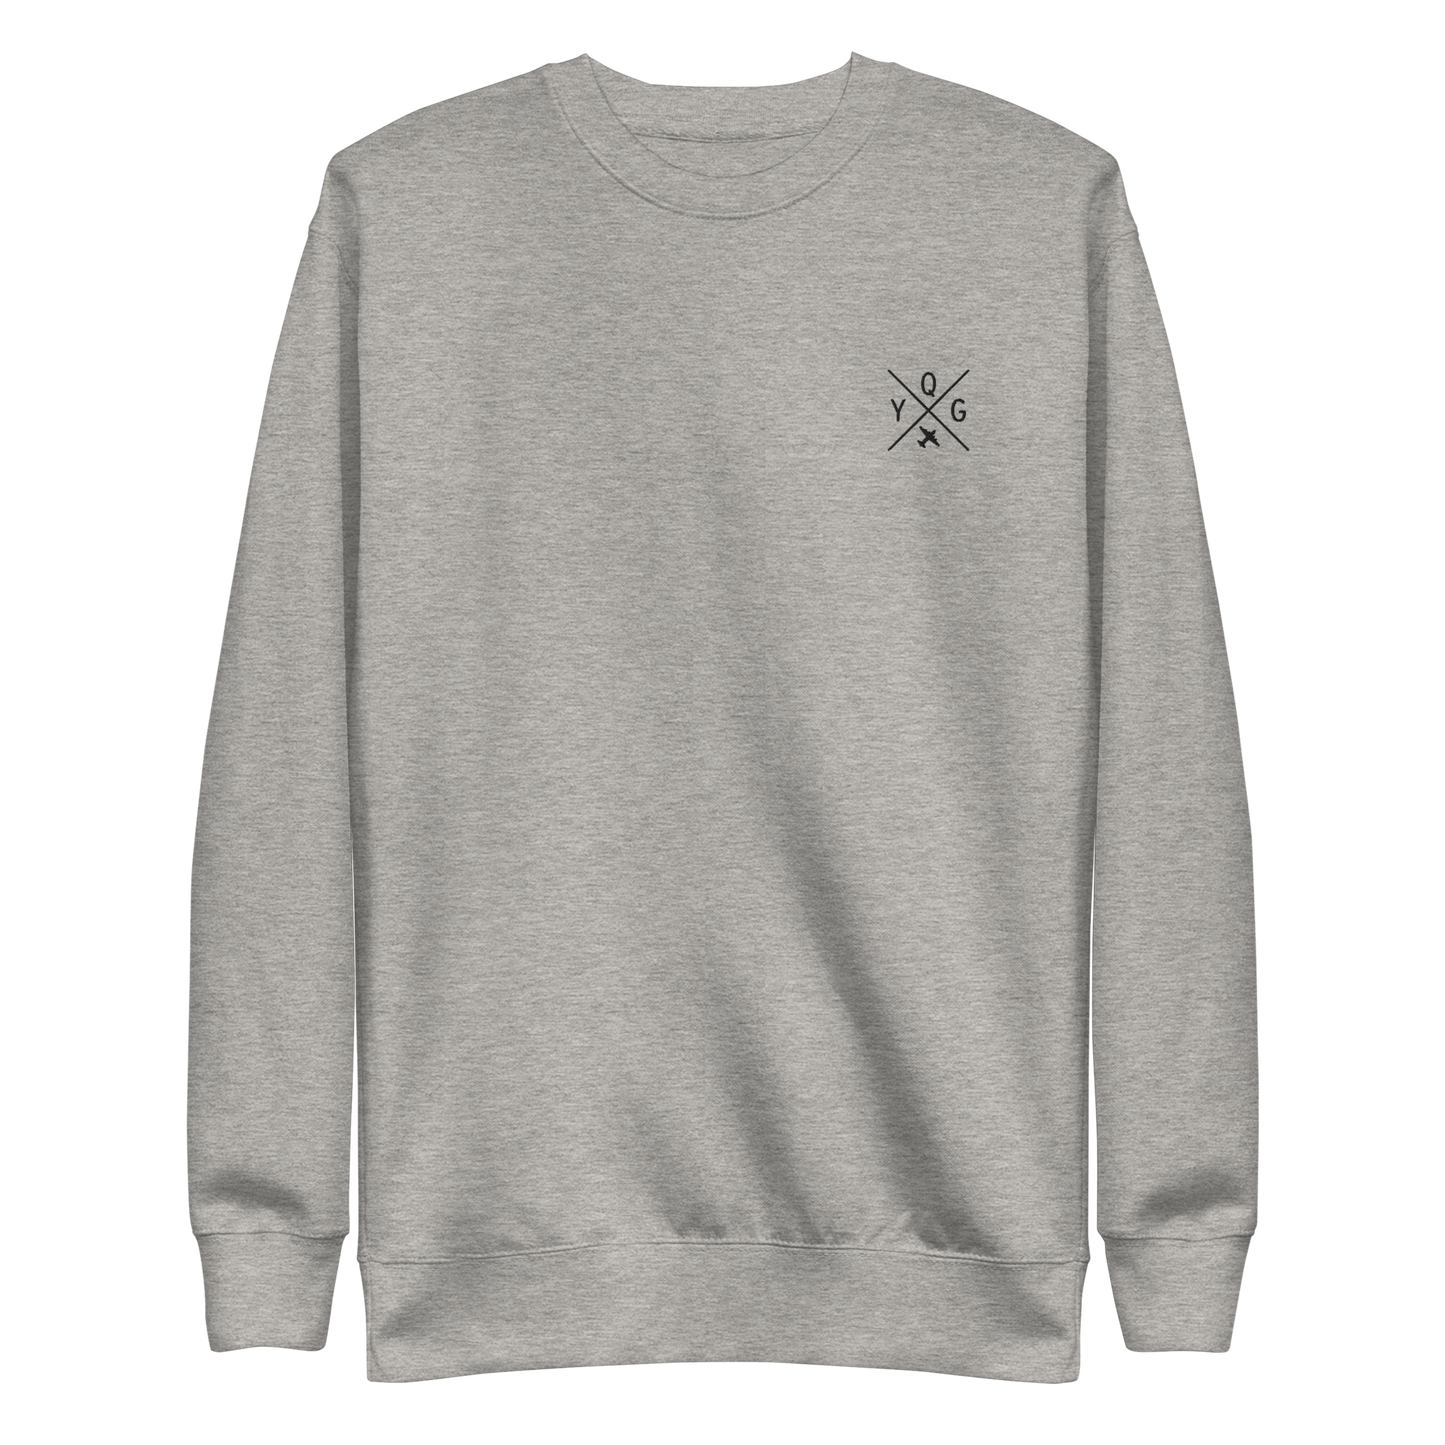 YHM Designs - YQG Windsor Premium Sweatshirt - Crossed-X Design with Airport Code and Vintage Propliner - Black Embroidery - Image 02